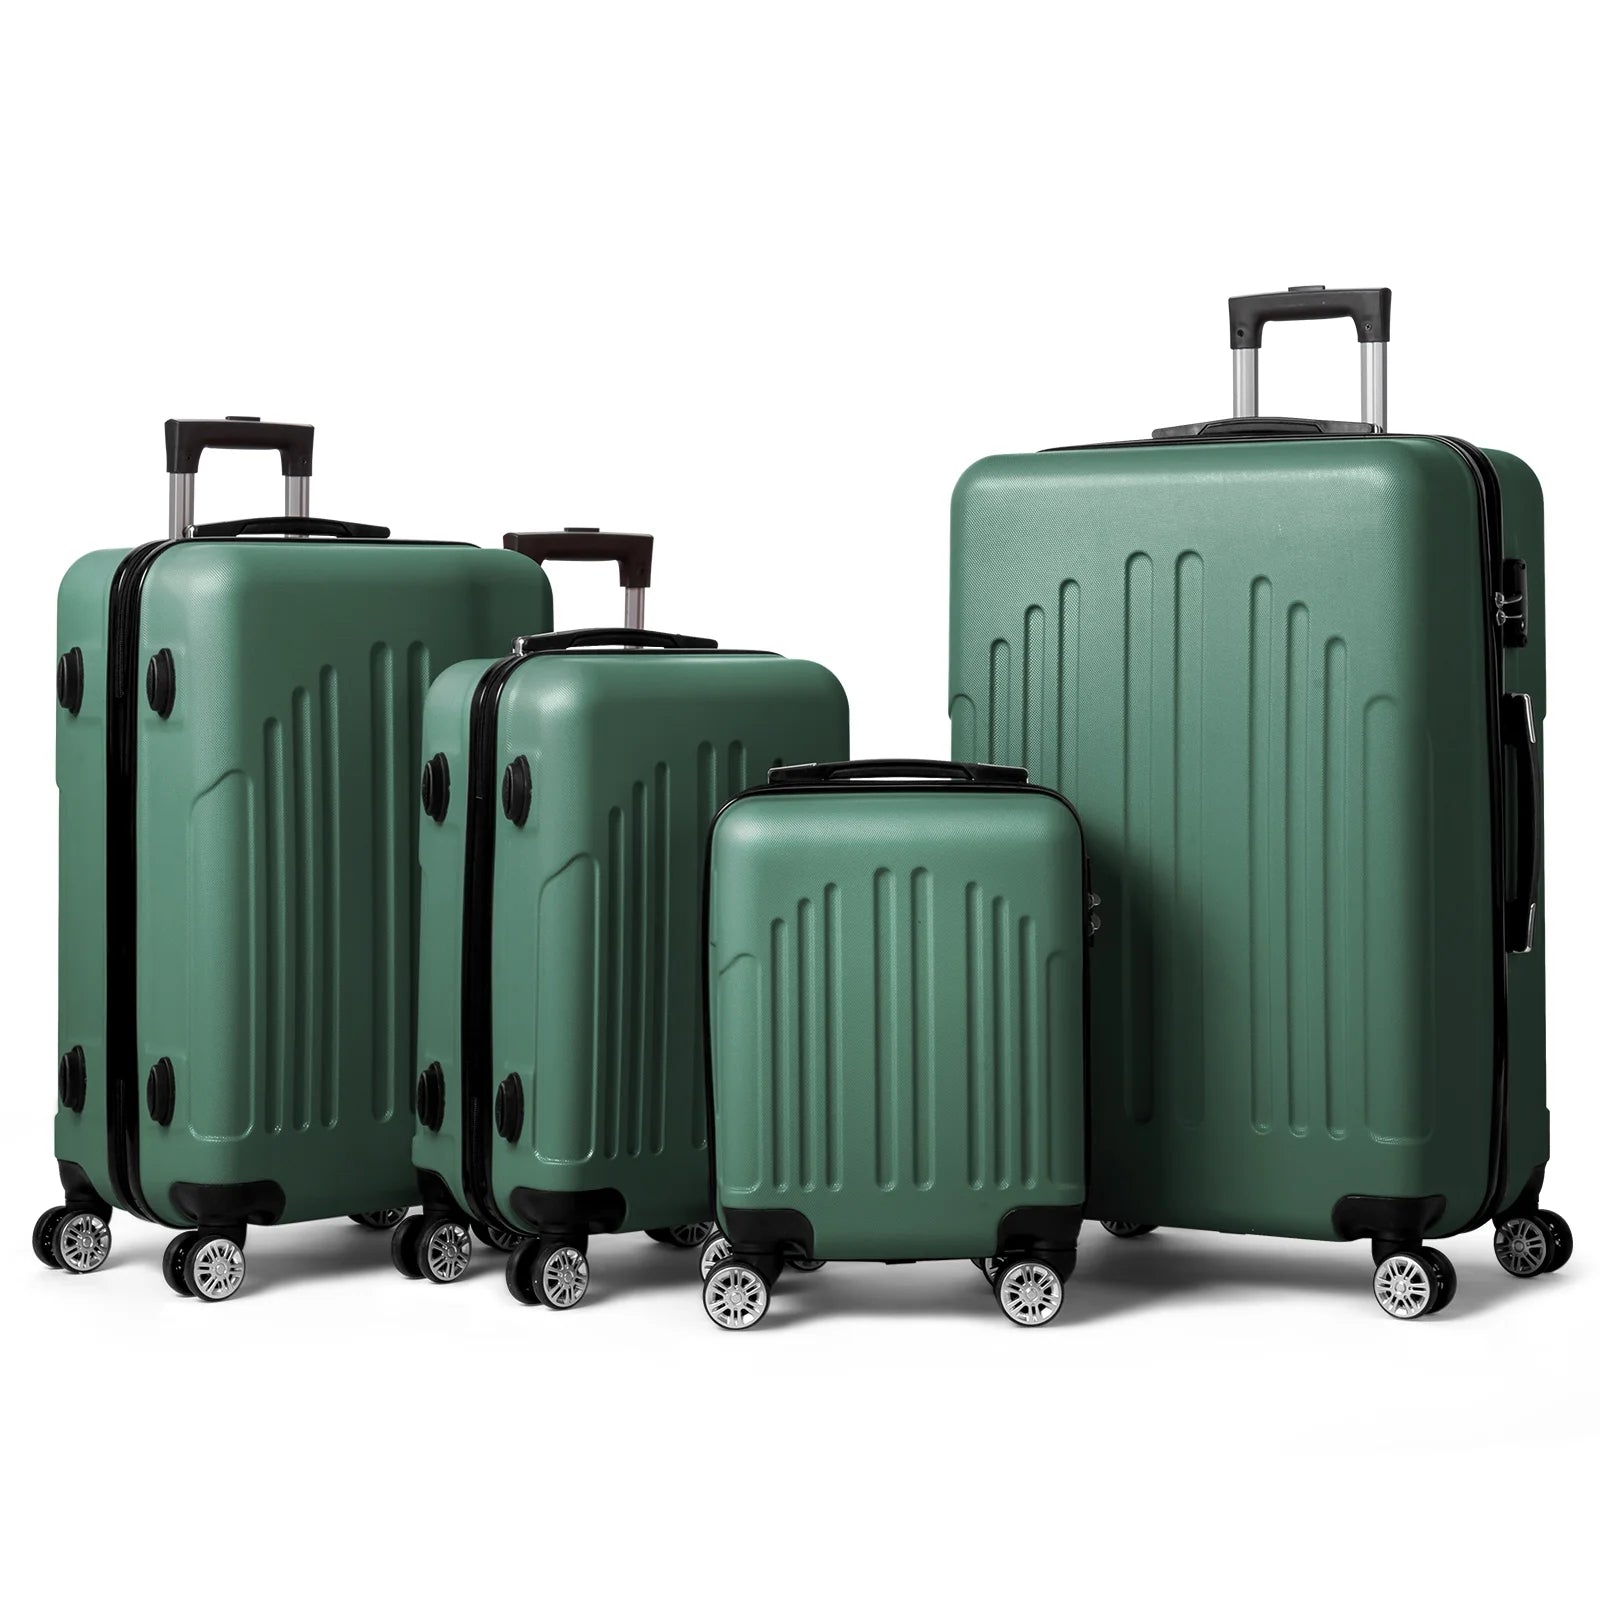 3 Or 4 Piece Luggage Sets With TSA Locks On Sale